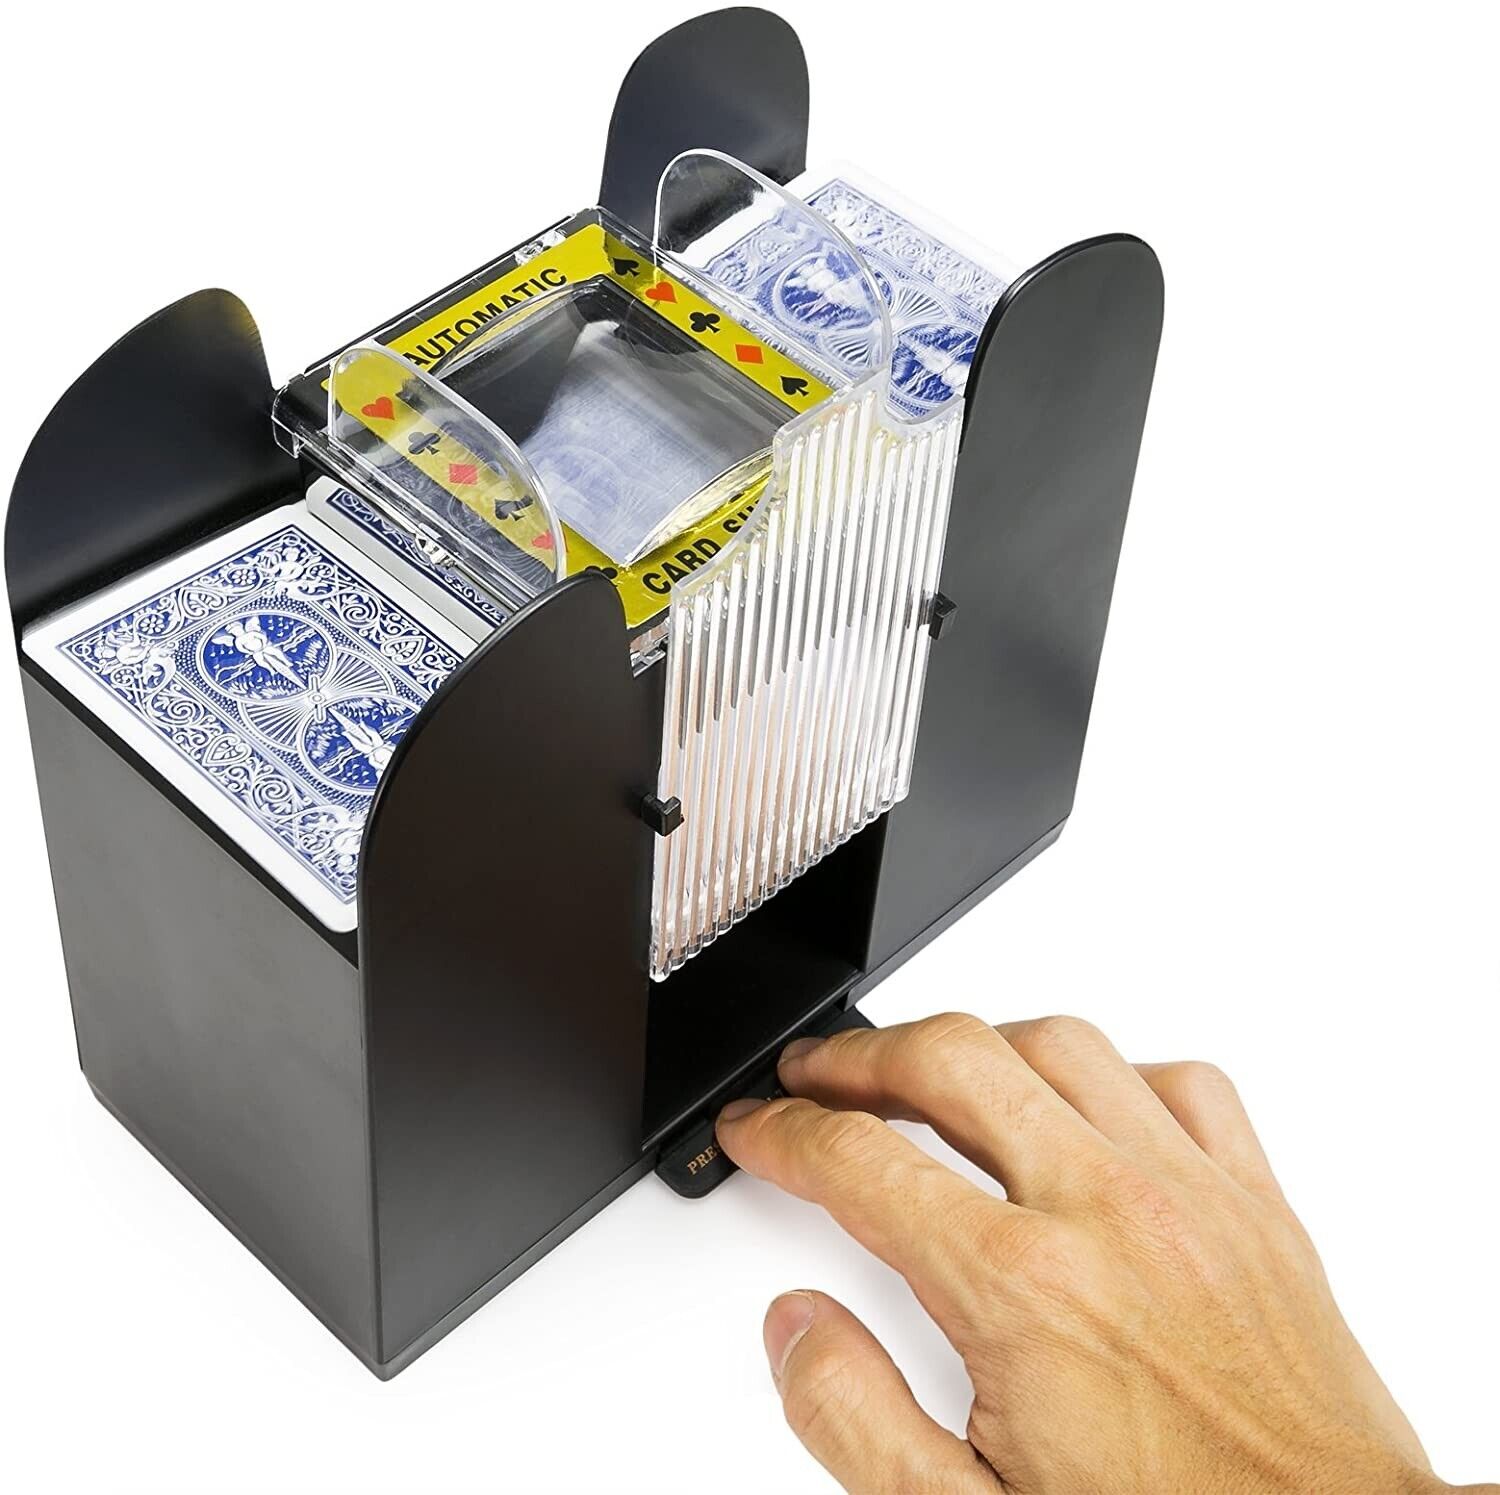 6-Deck Automatic Battery Operated Playing Card Shuffler Casino Casino BlackJack